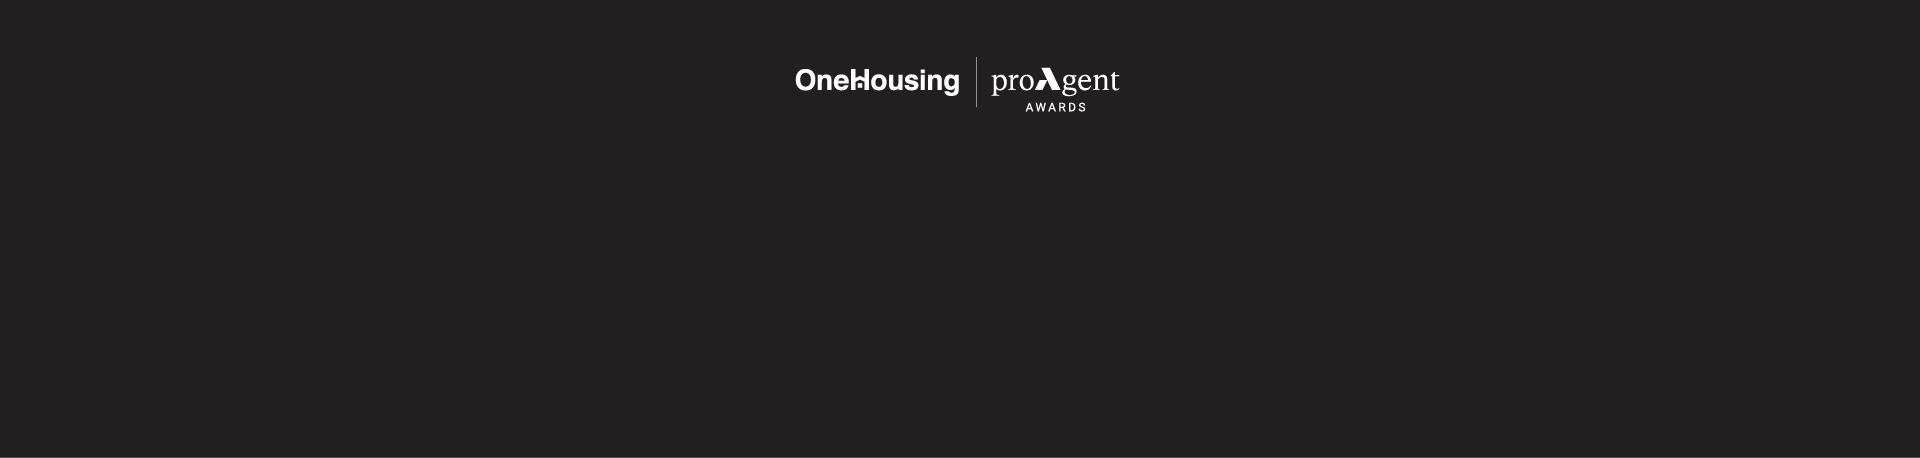 OneHousing trao giải Pro Agent Awards tháng 10 và Pro Agent Marathon 2021 